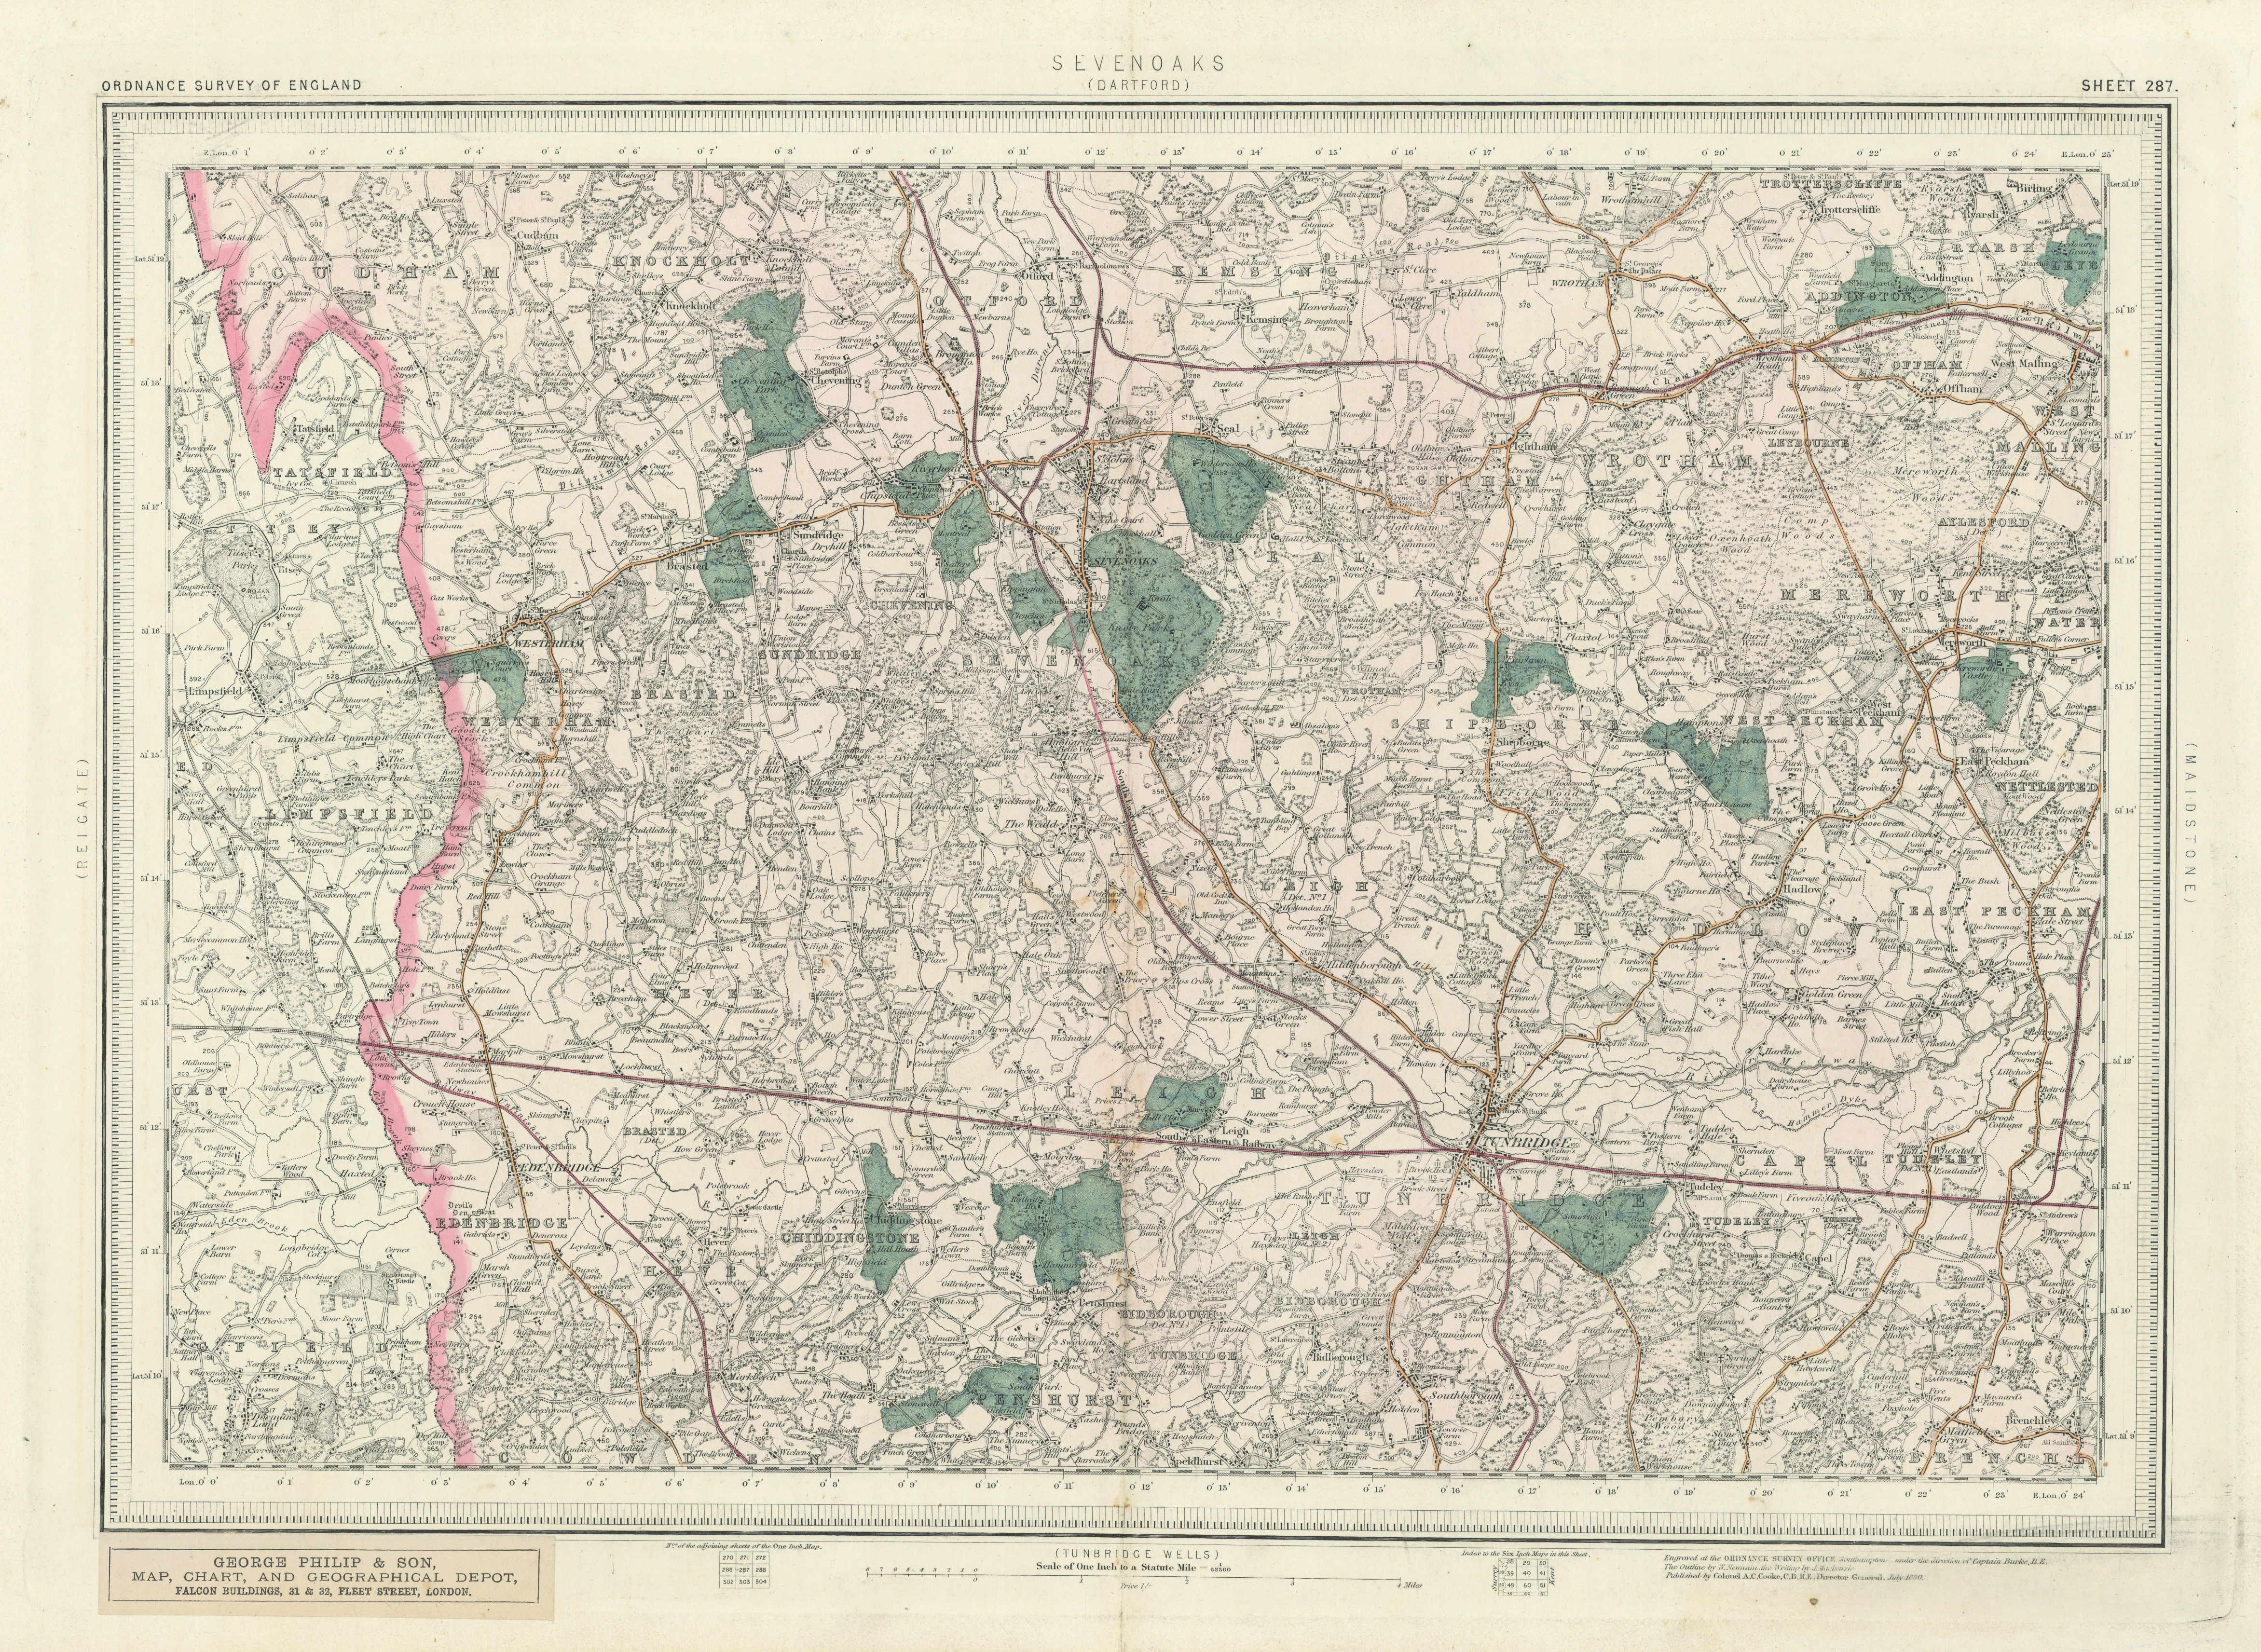 Ordnance Survey Sheet 287 Sevenoaks. Tonbridge Malling Kent Downs 1880 old map